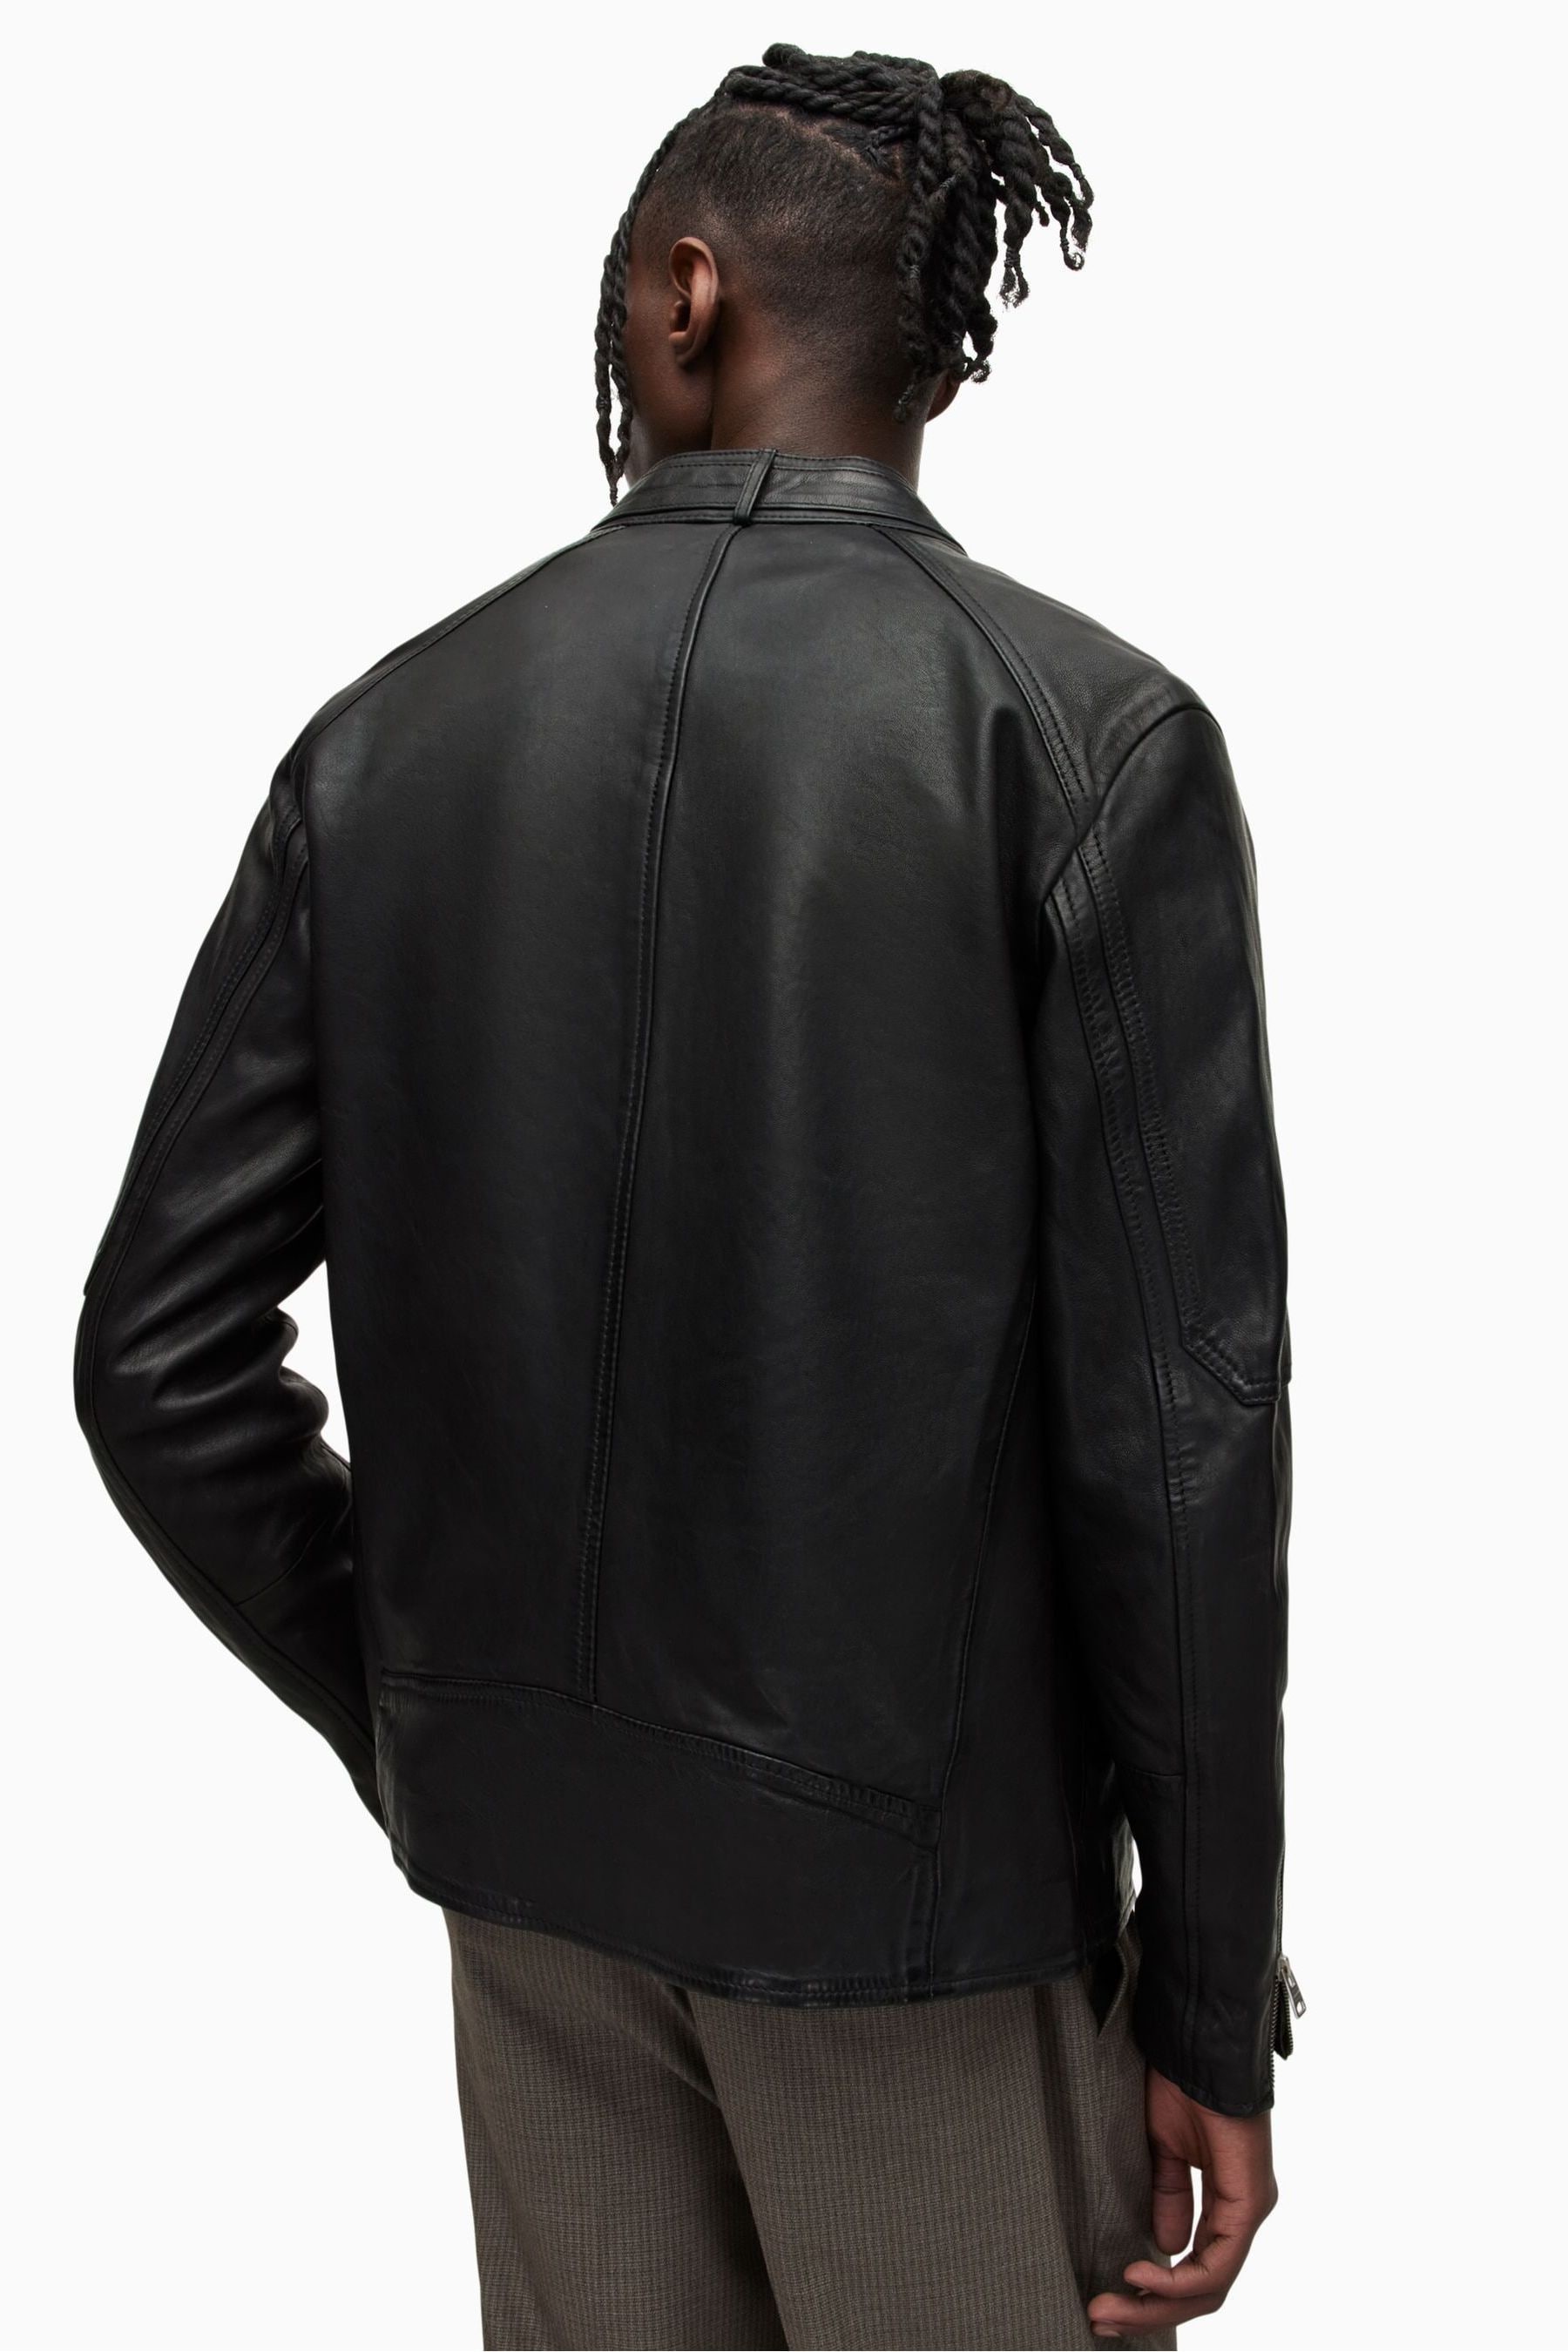 Buy AllSaints Black Cora Jacket from the Next UK online shop